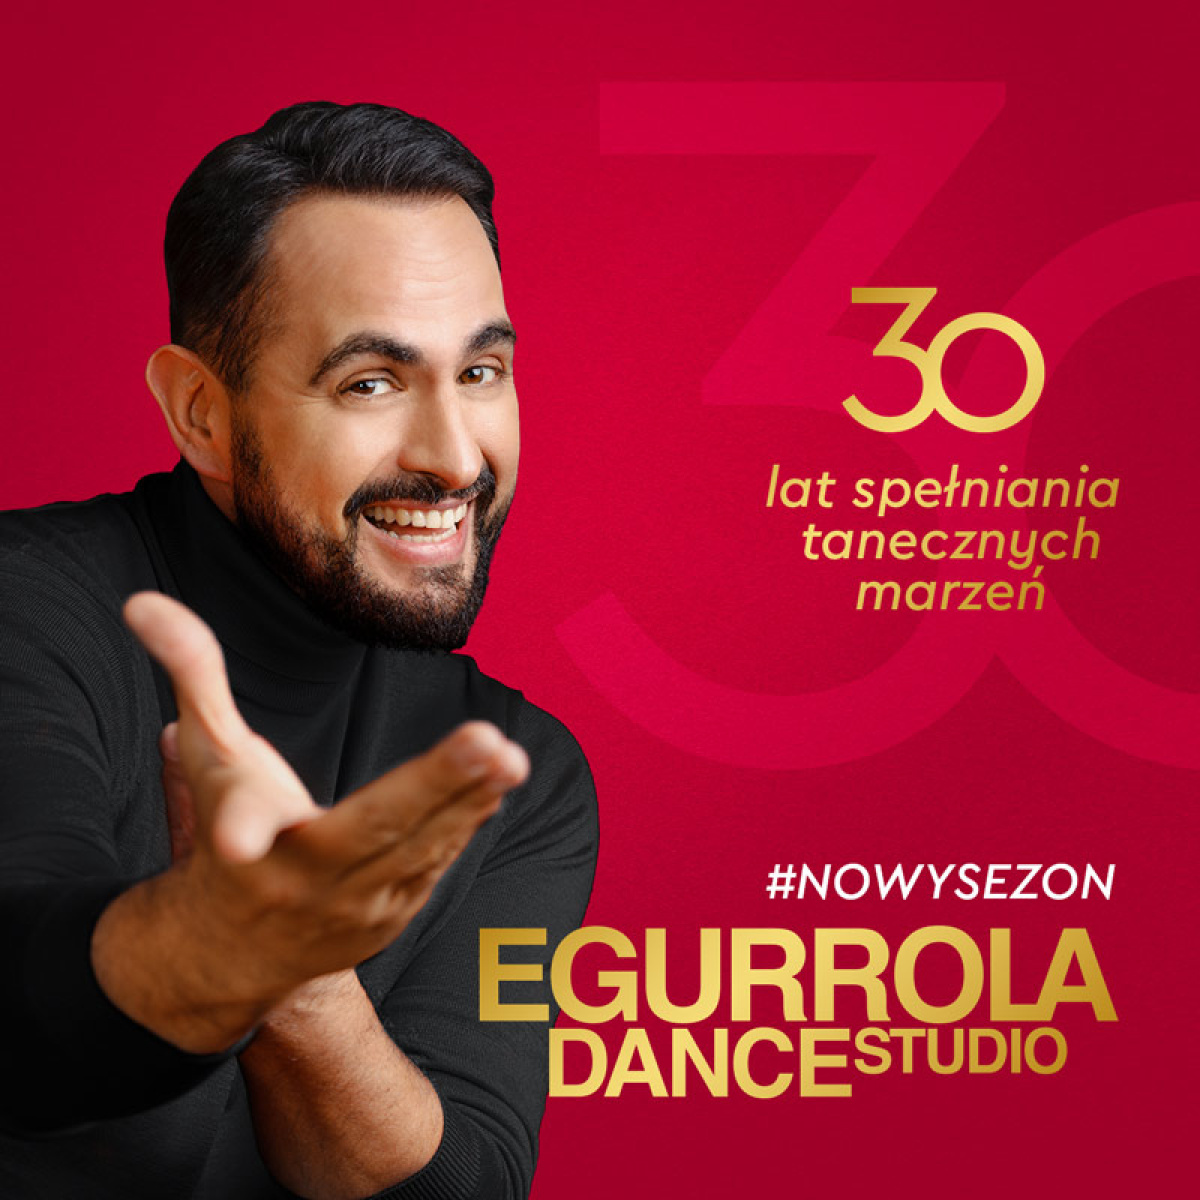 NOWY SEZON W EGURROLA DANCE STUDIO